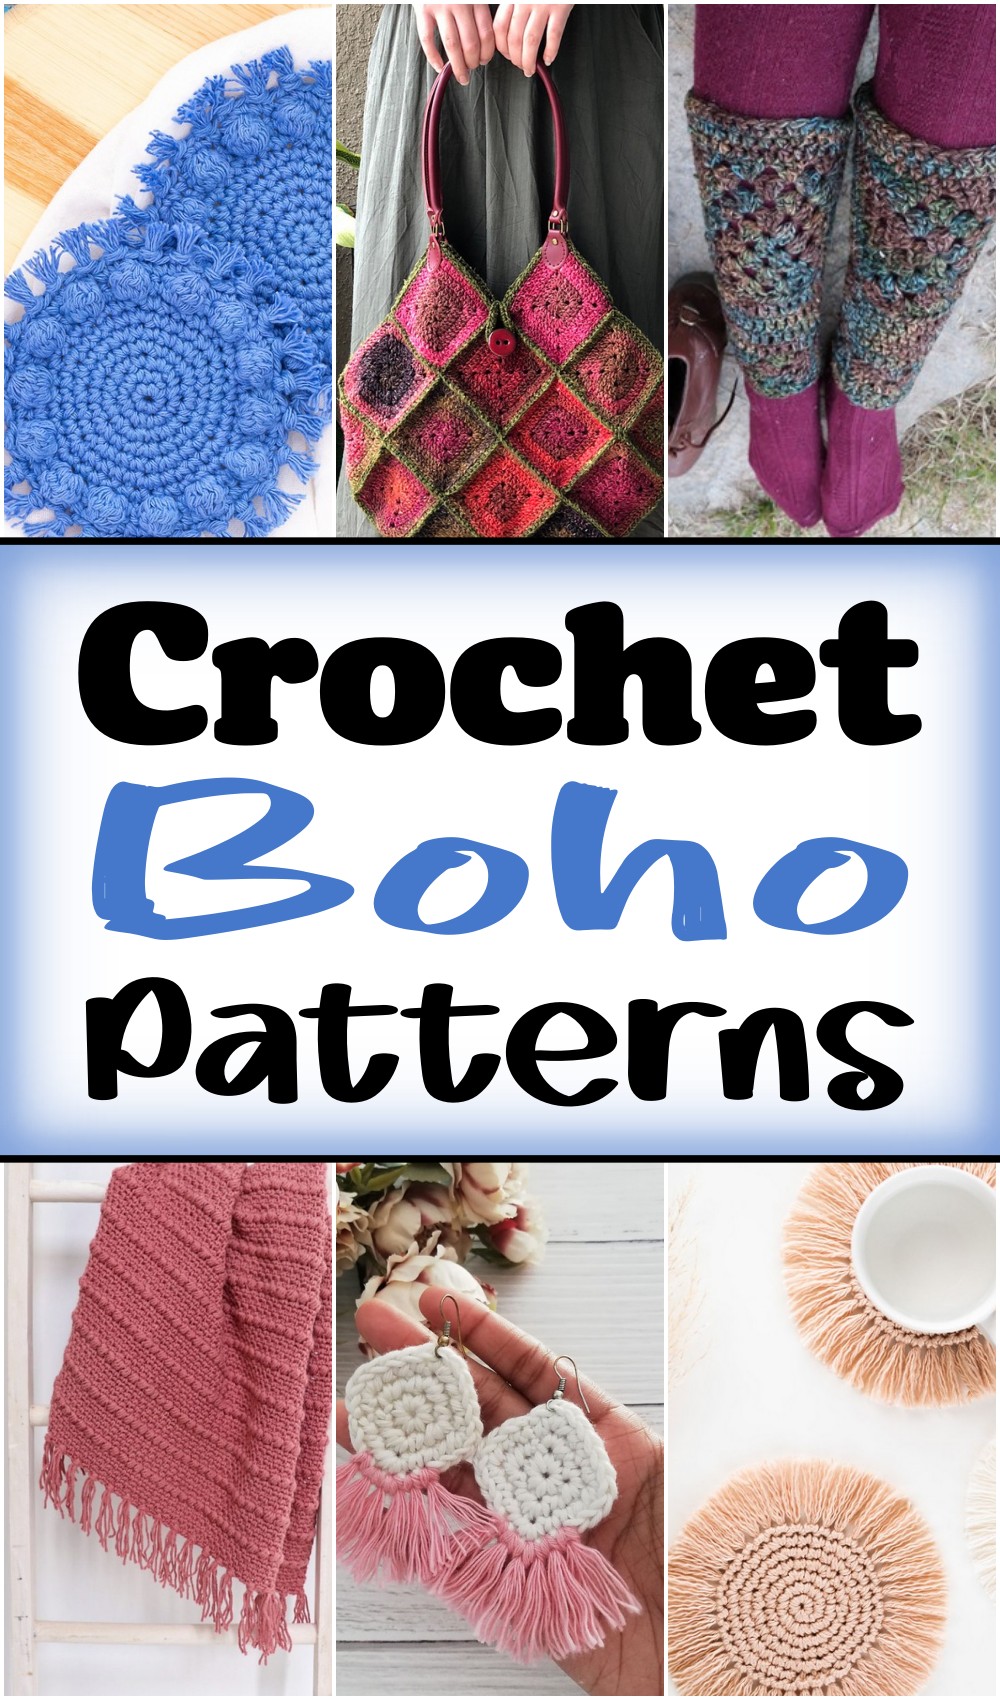 Crochet Boho Patterns